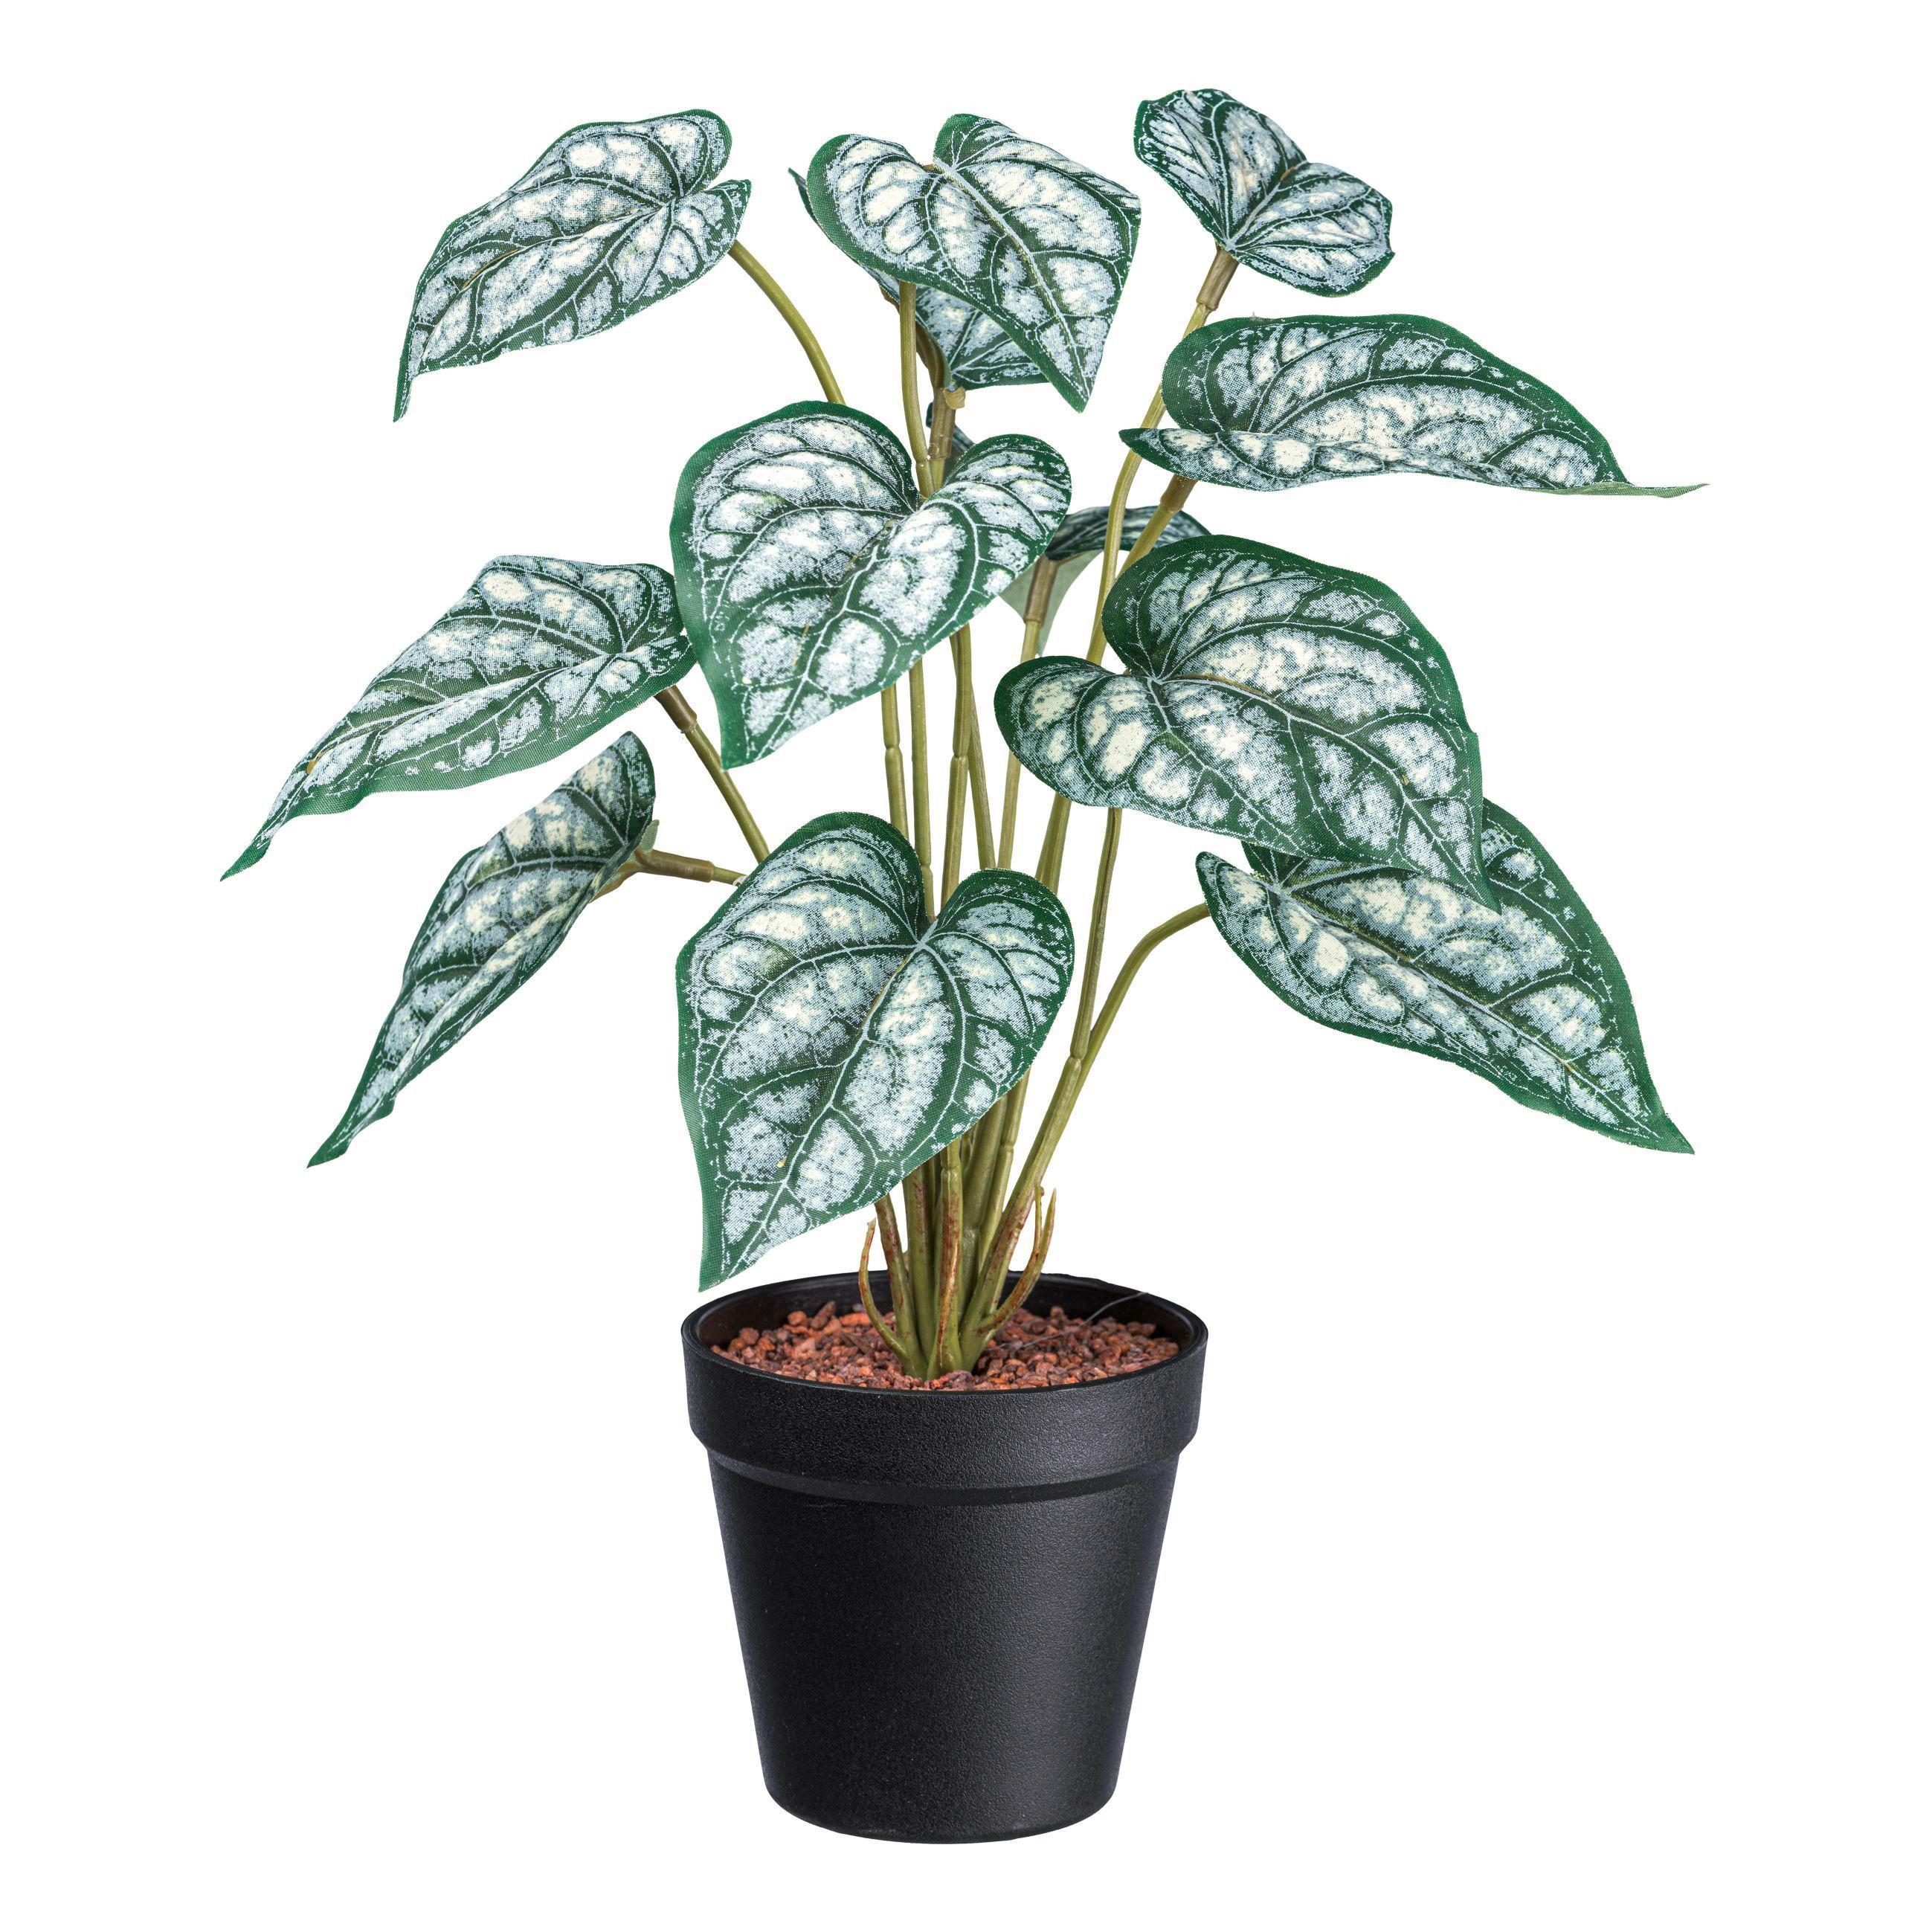 Umelá Rastlina V: 38cm - čierna/zelená, Basics, plast (38cm) - Modern Living